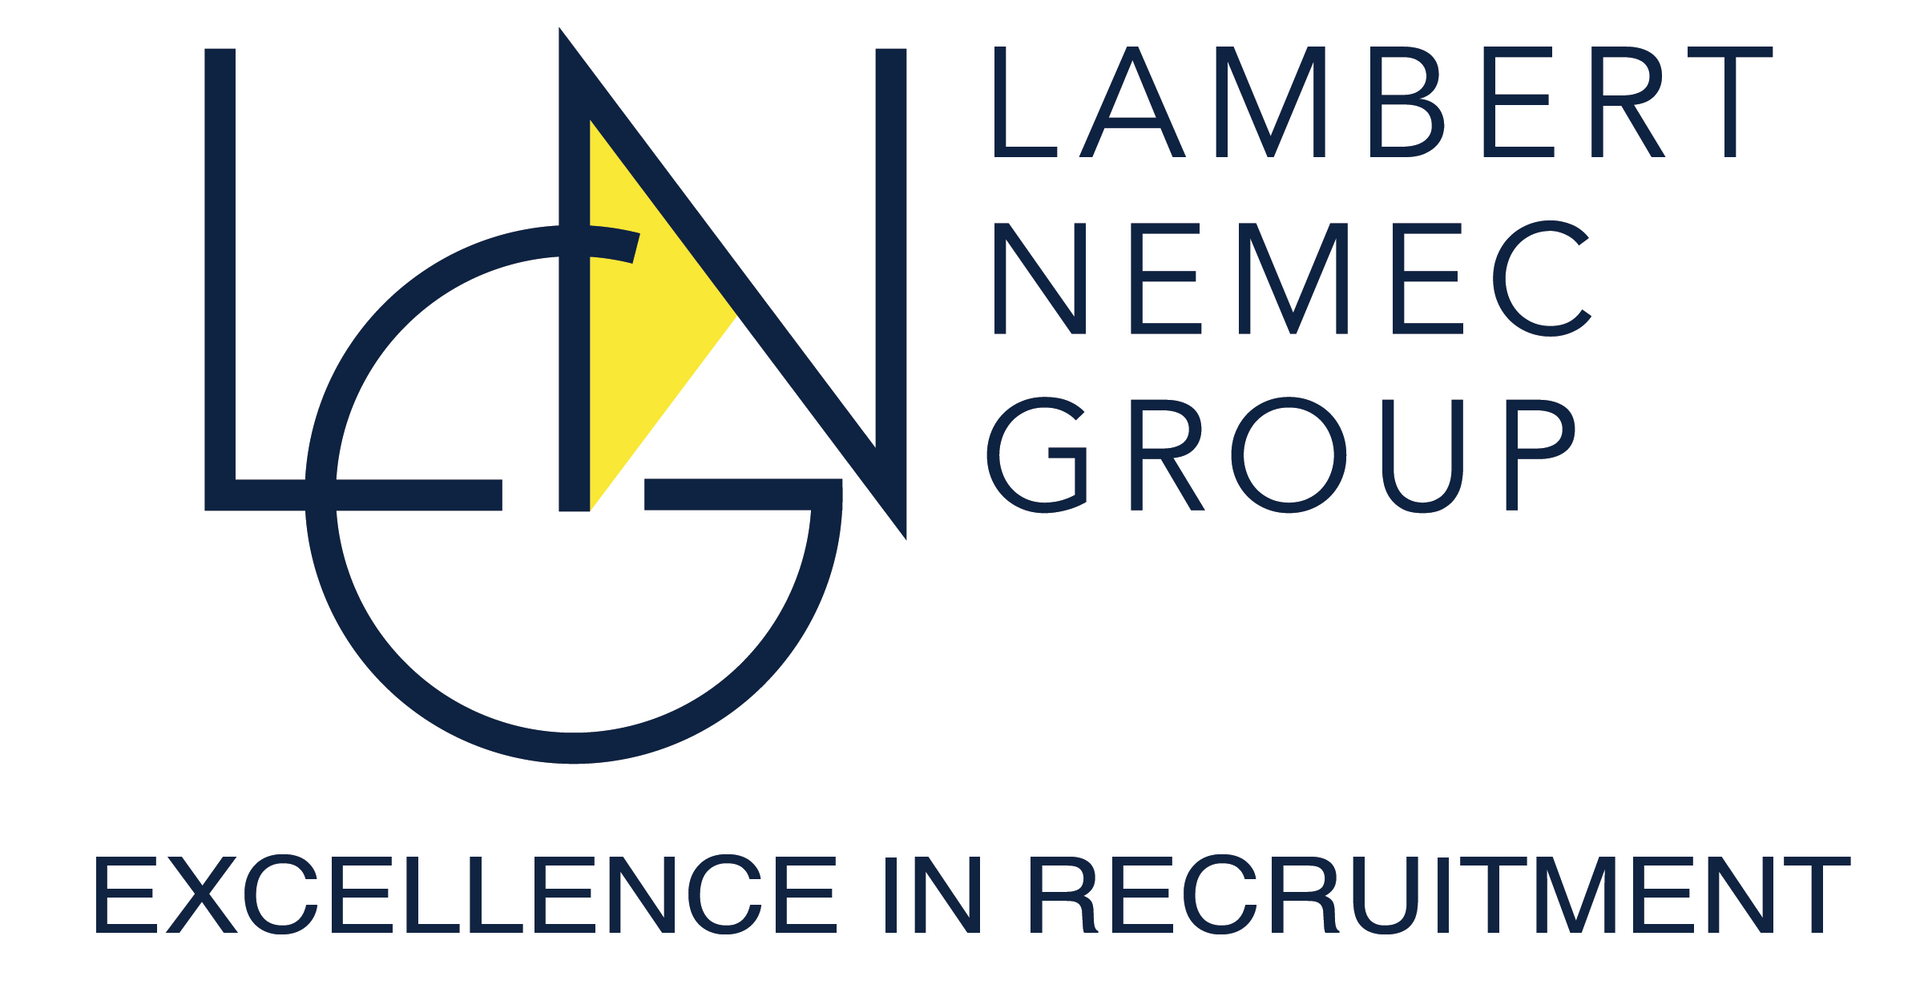 the lambert nemec group logo is blue and yellow .